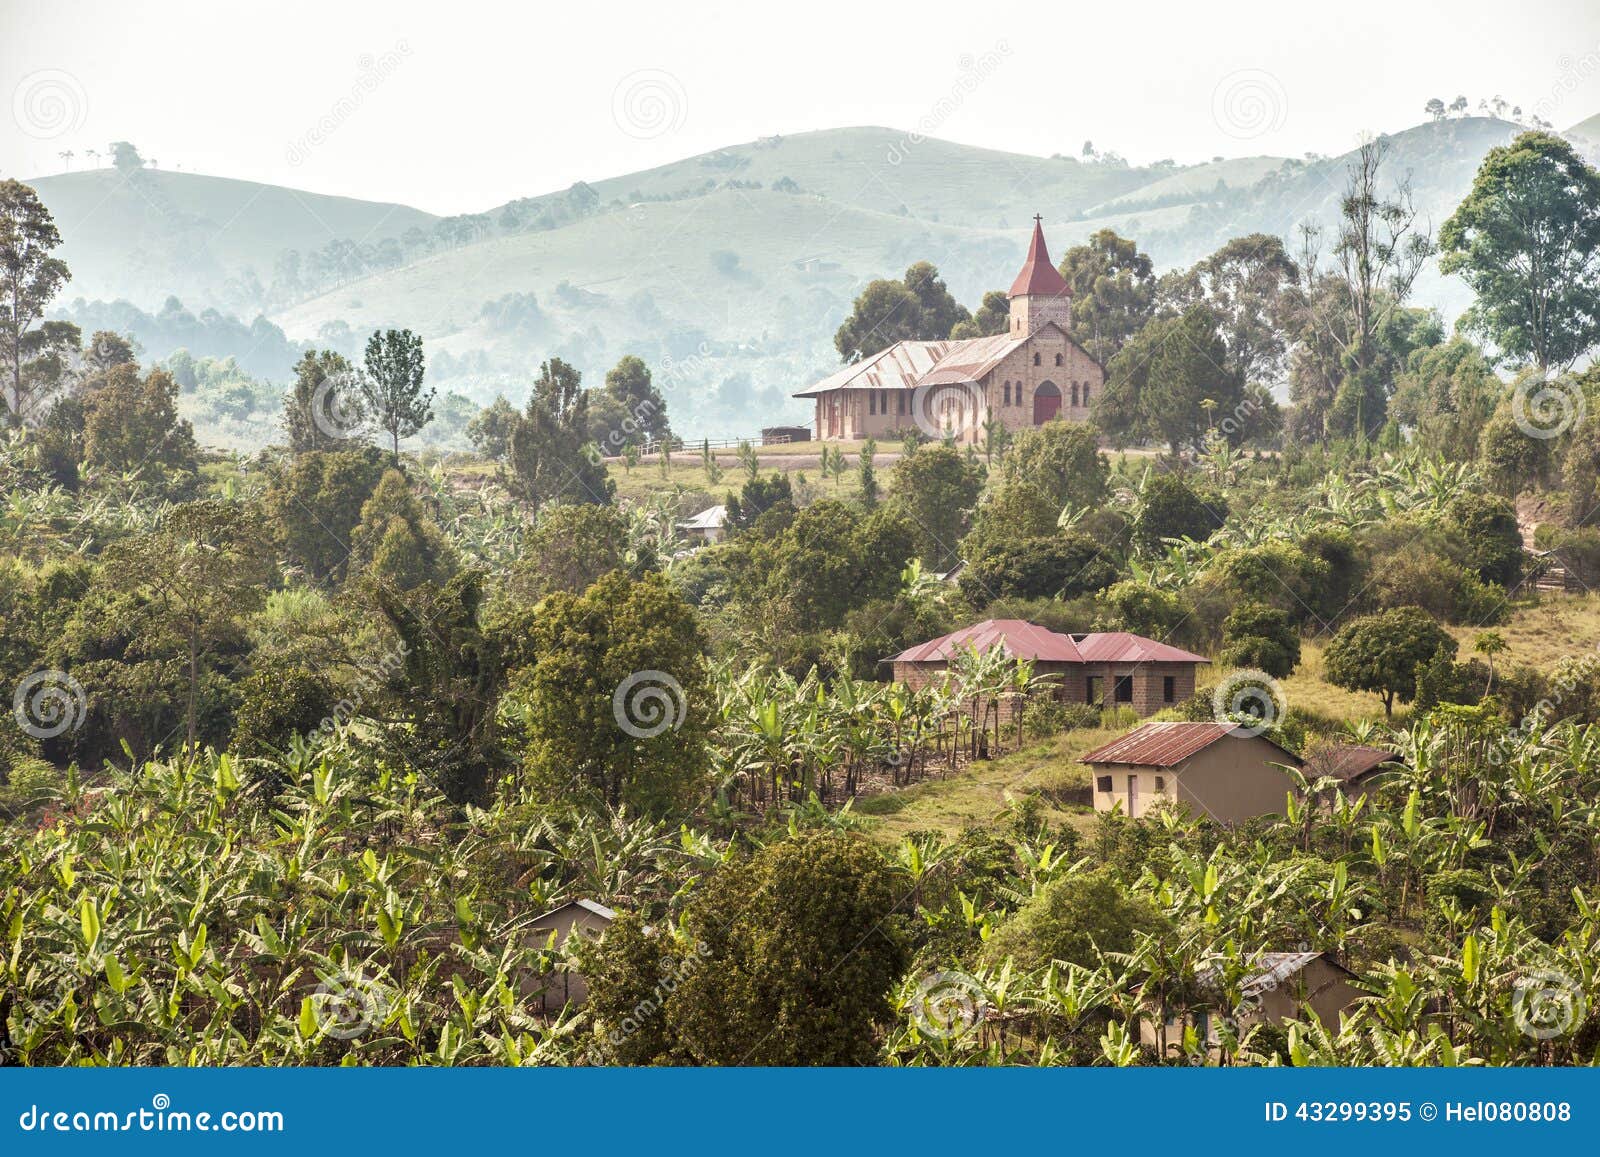 uganda - misty landscape with church